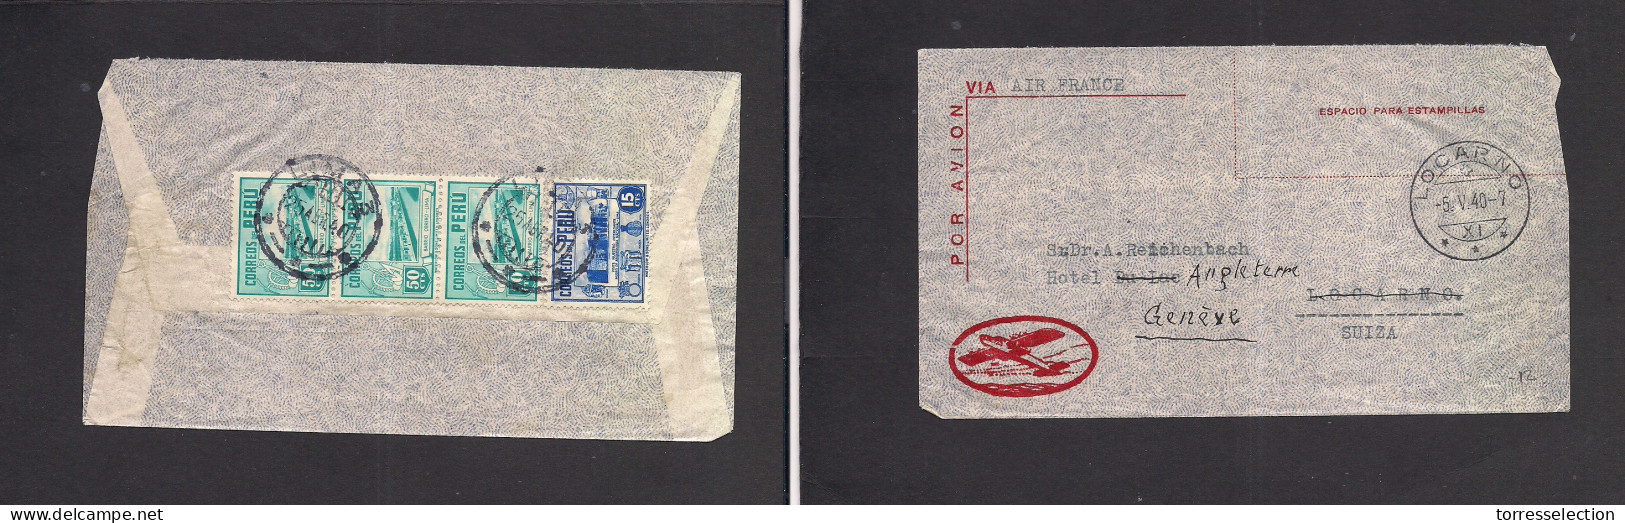 PERU. 1940 (25 April) Lima 3 - Switzerland, Locarno (5 May) Reverse Air France Multifkd Envelope. 1,65 Sales Rate. Fine. - Perù